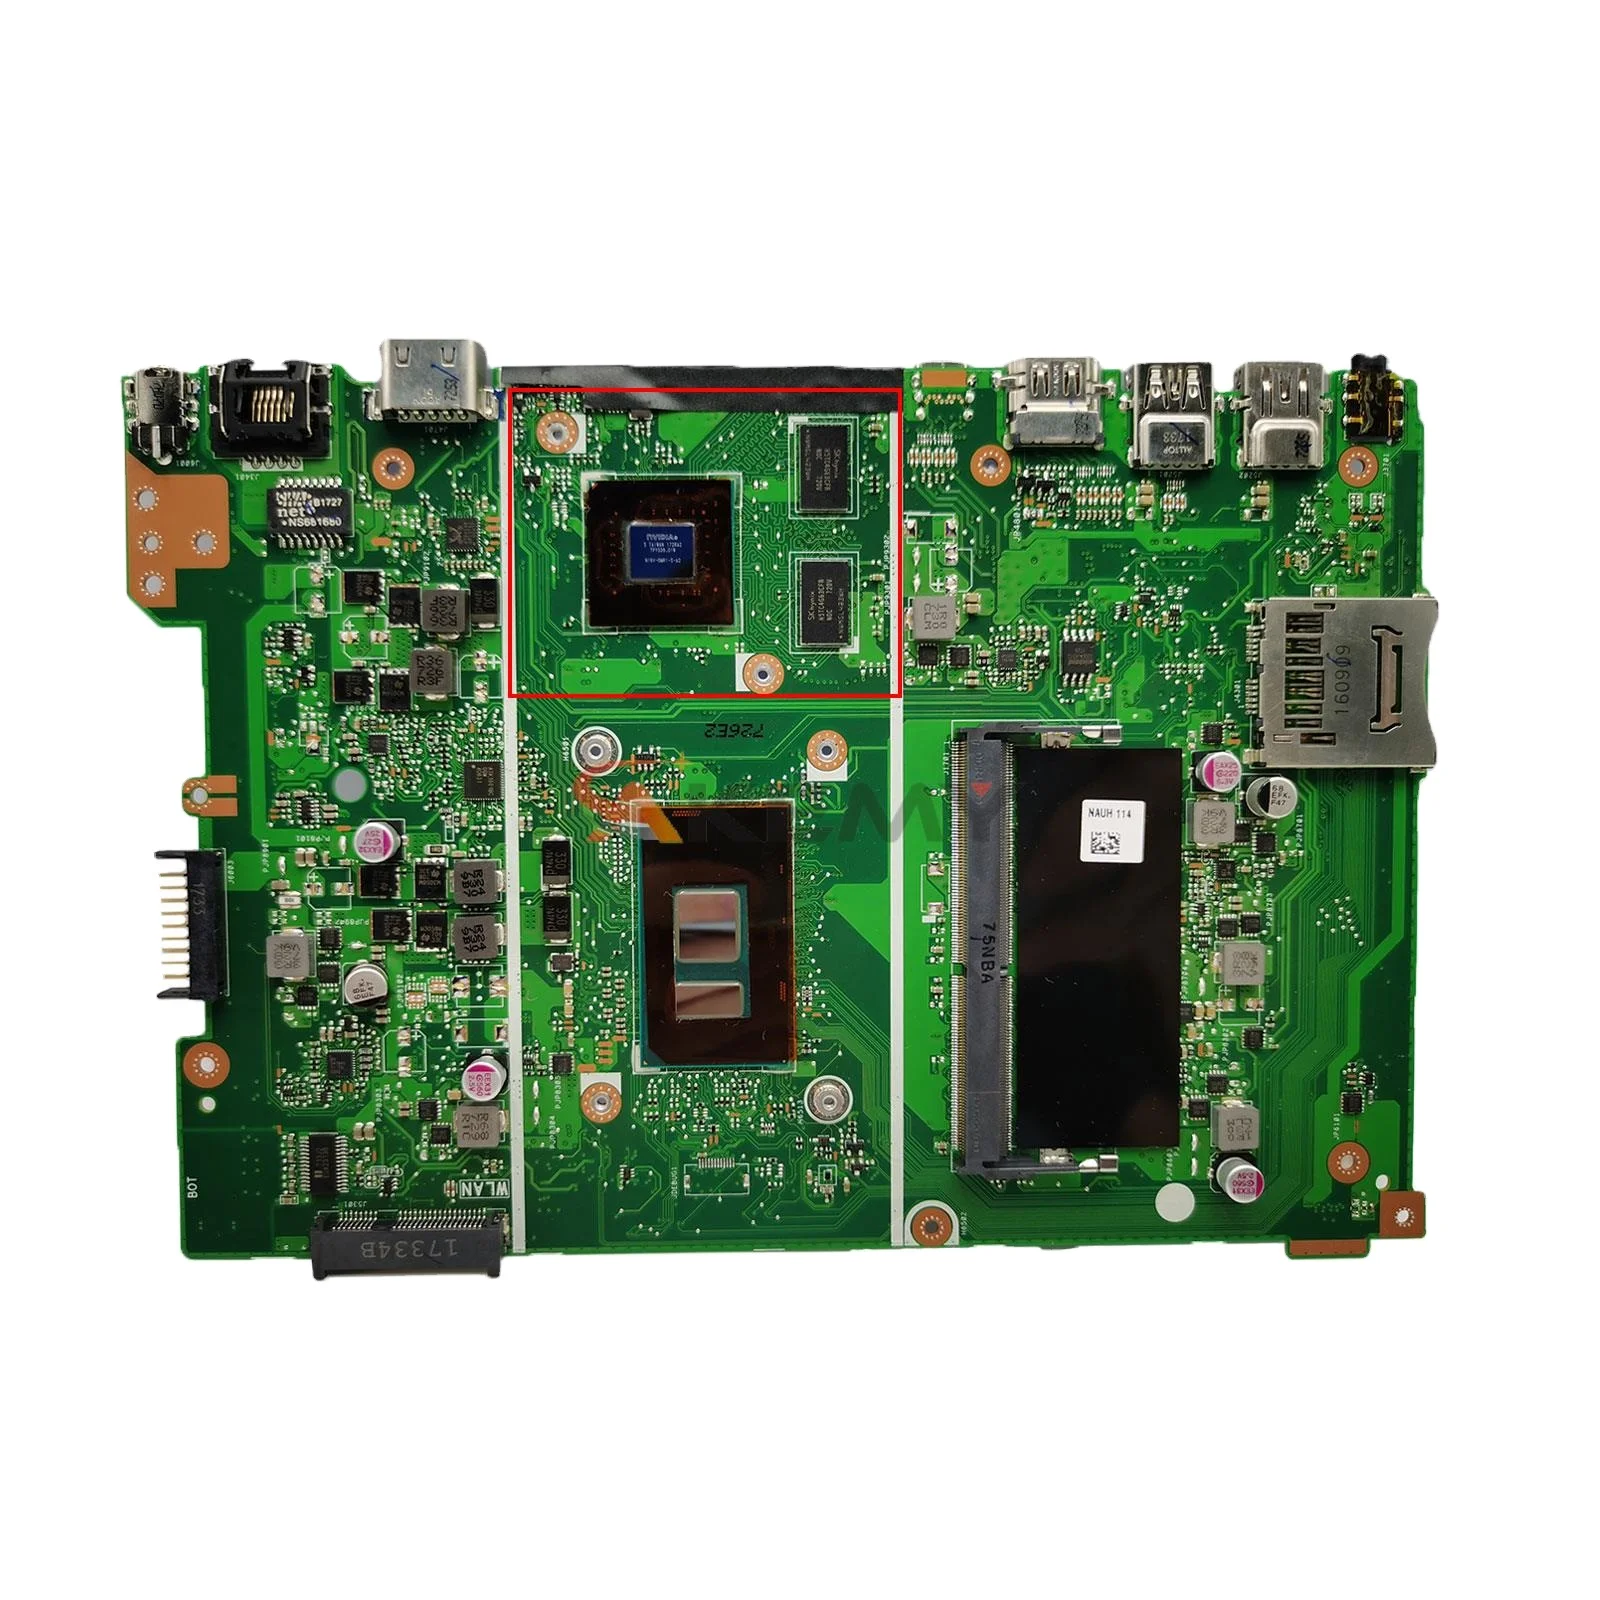 

Notebook X441UA Mainboard For ASUS X441UV X441U F441U A441U X441UVK X441UAK Laptop Motherboard 4405U I3 I5 I7 RAM-4GB/8GB